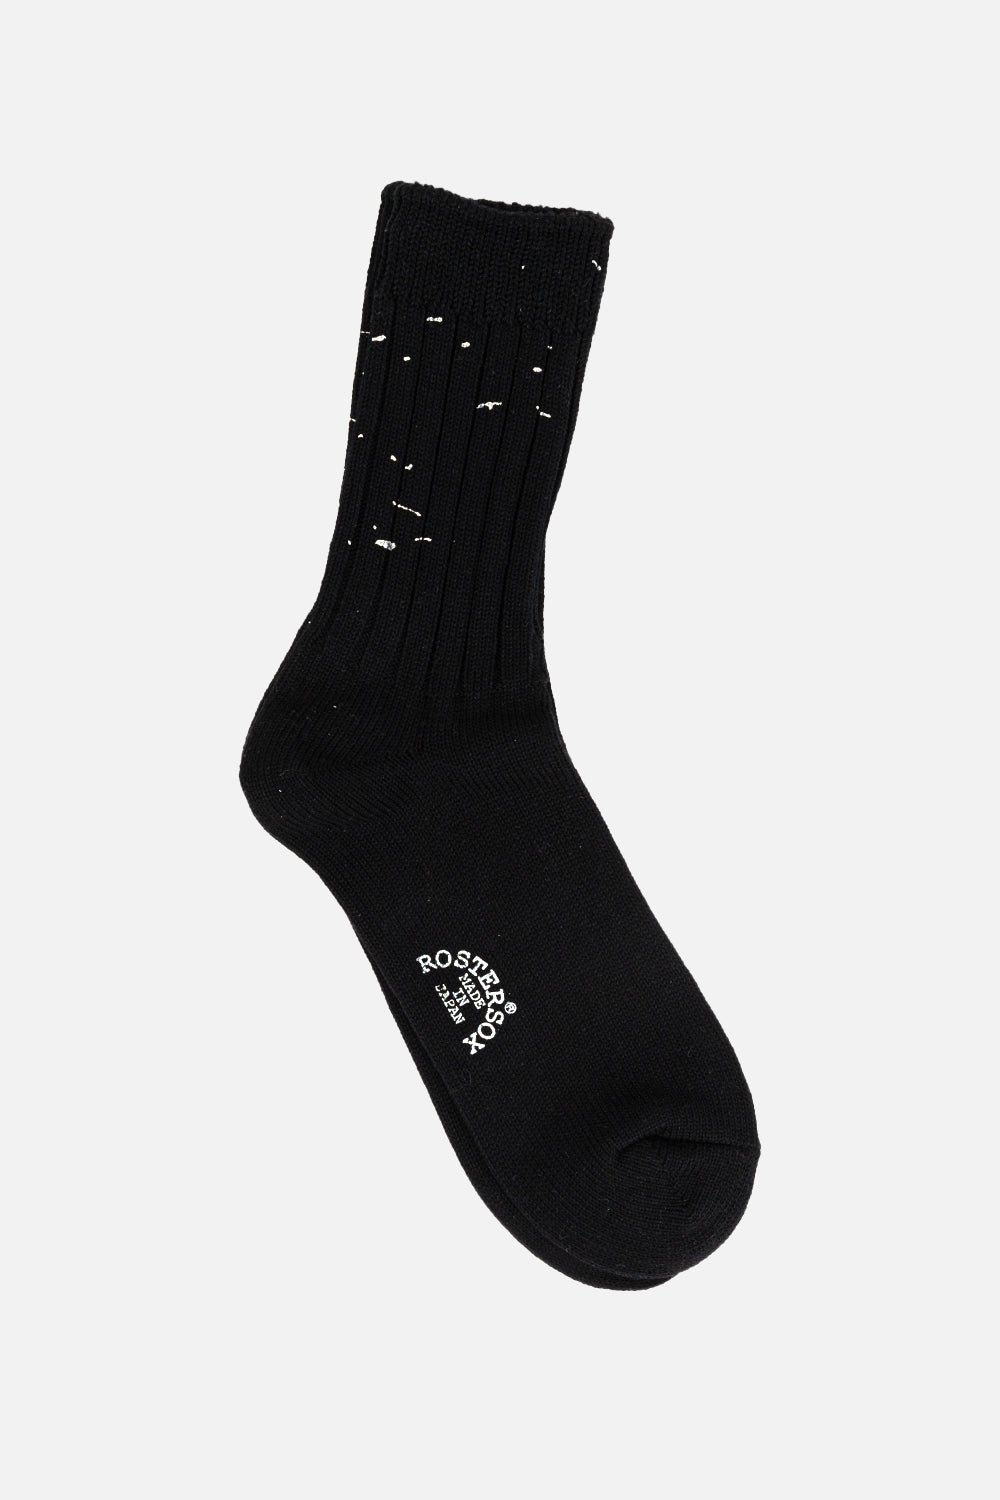 Rostersox-paint-socks-black